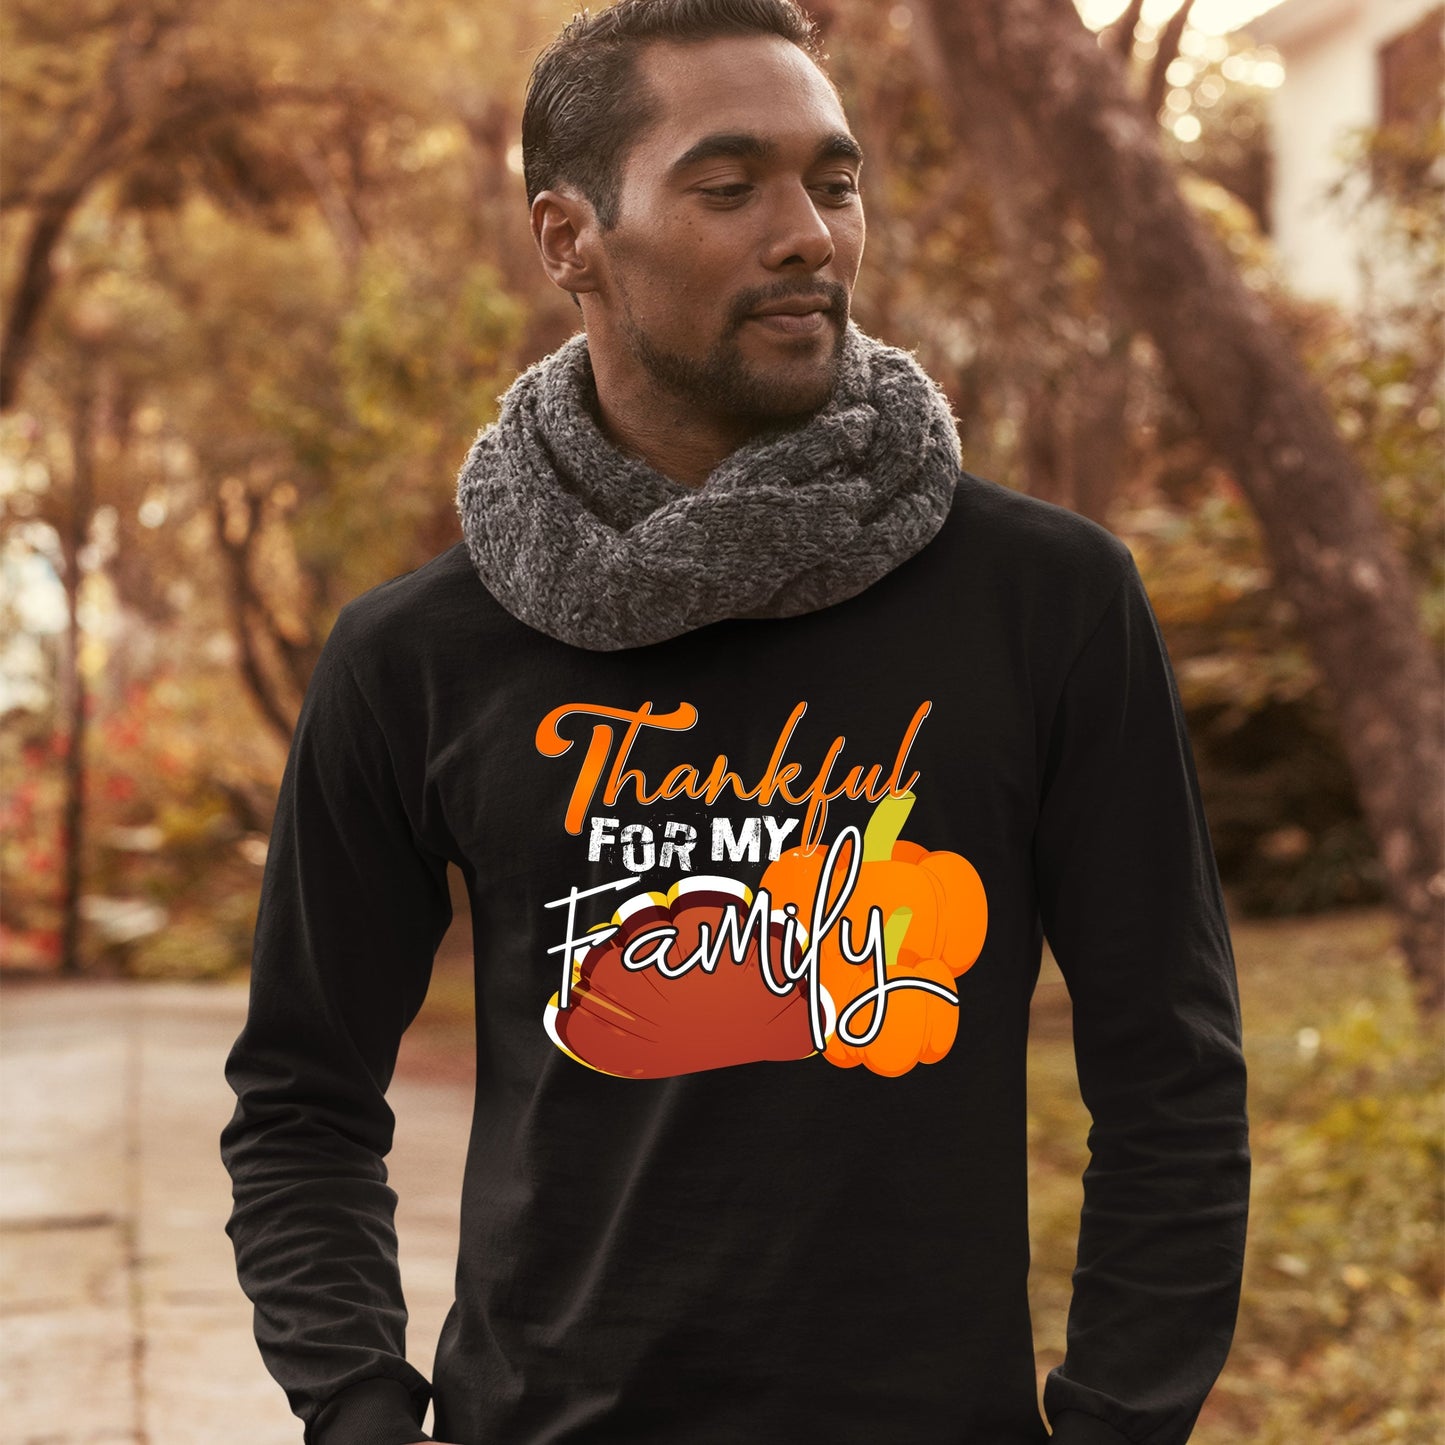 Thankful For My Family, Thanksgiving Sweatshirt, Thanksgiving Sweater for Men, Thanksgiving Gift Ideas, Cute Thanksgiving